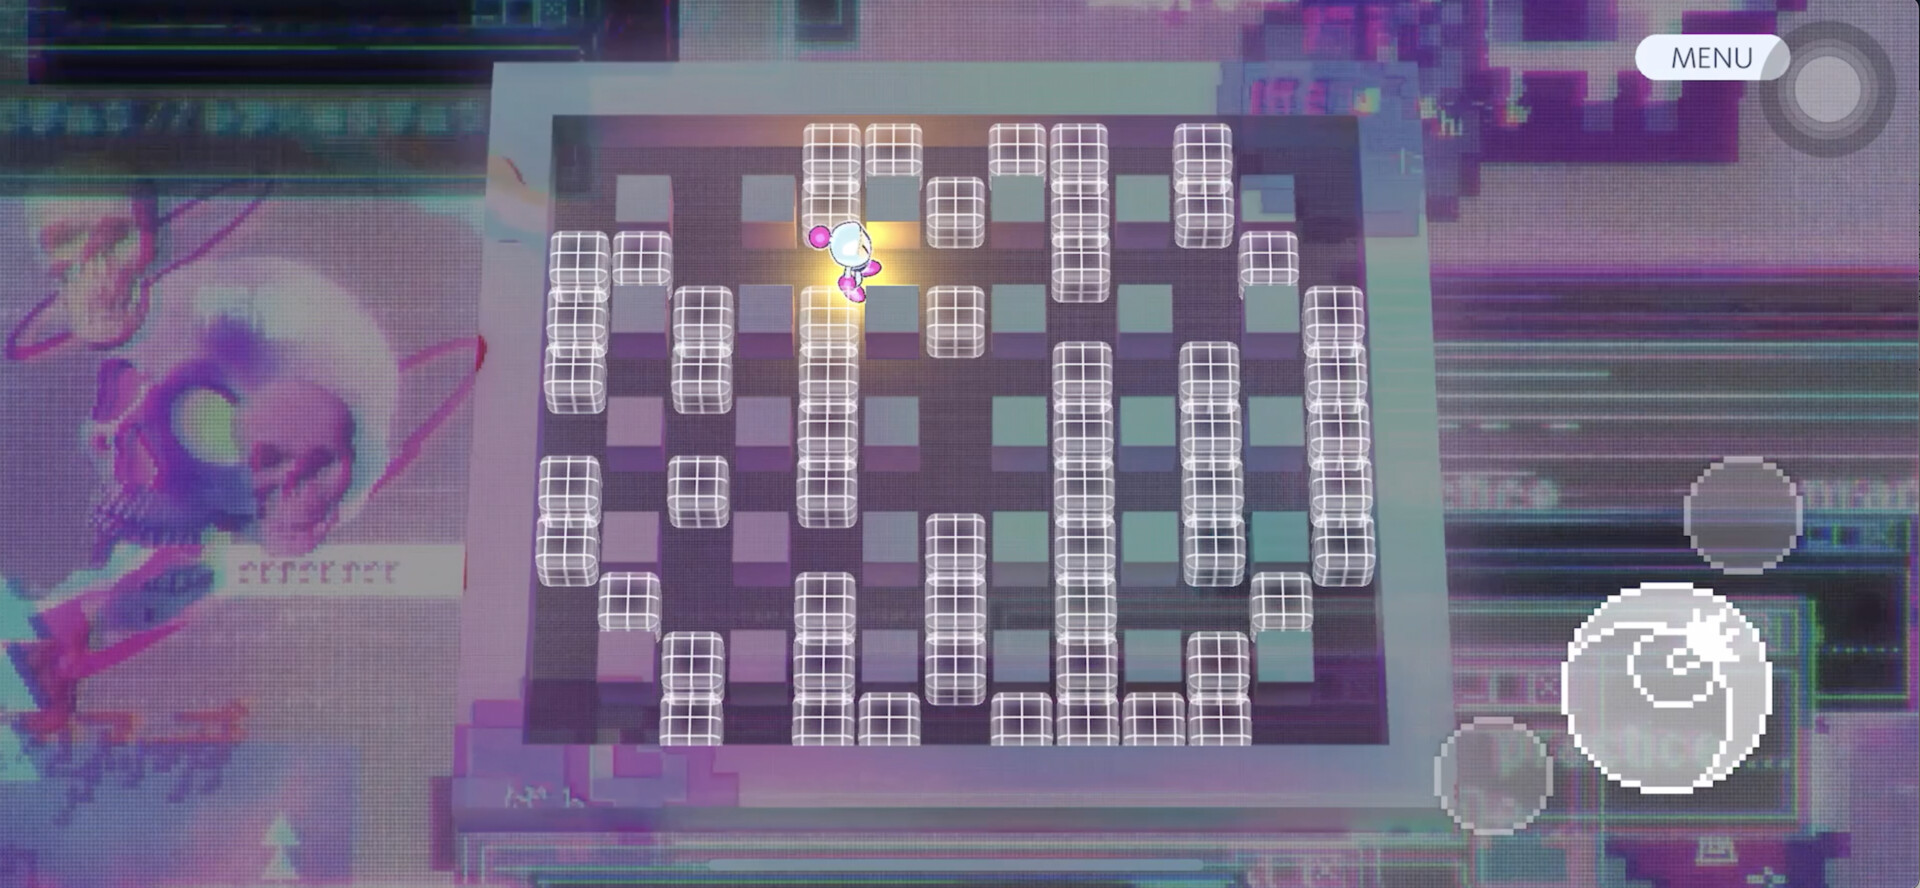 Konami announces new music-driven Bomberman game for Apple Arcade - Polygon